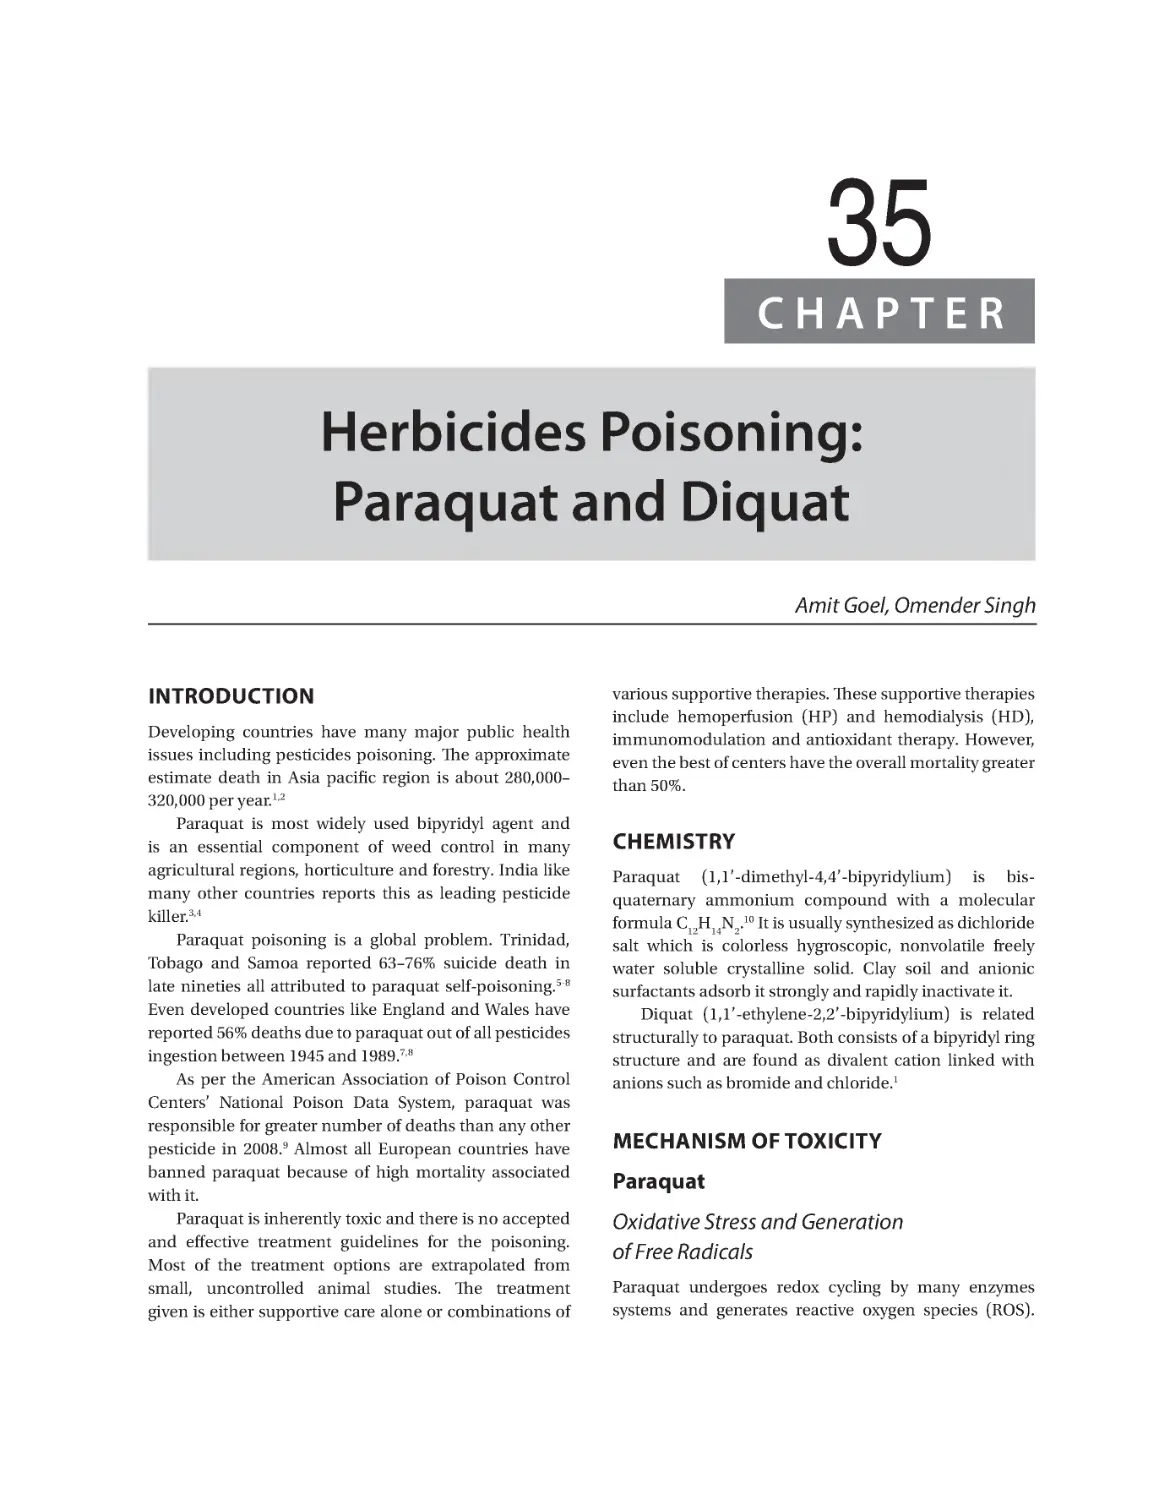 Chapter 35: Herbicides Poisoning: Paraquat and Diquat